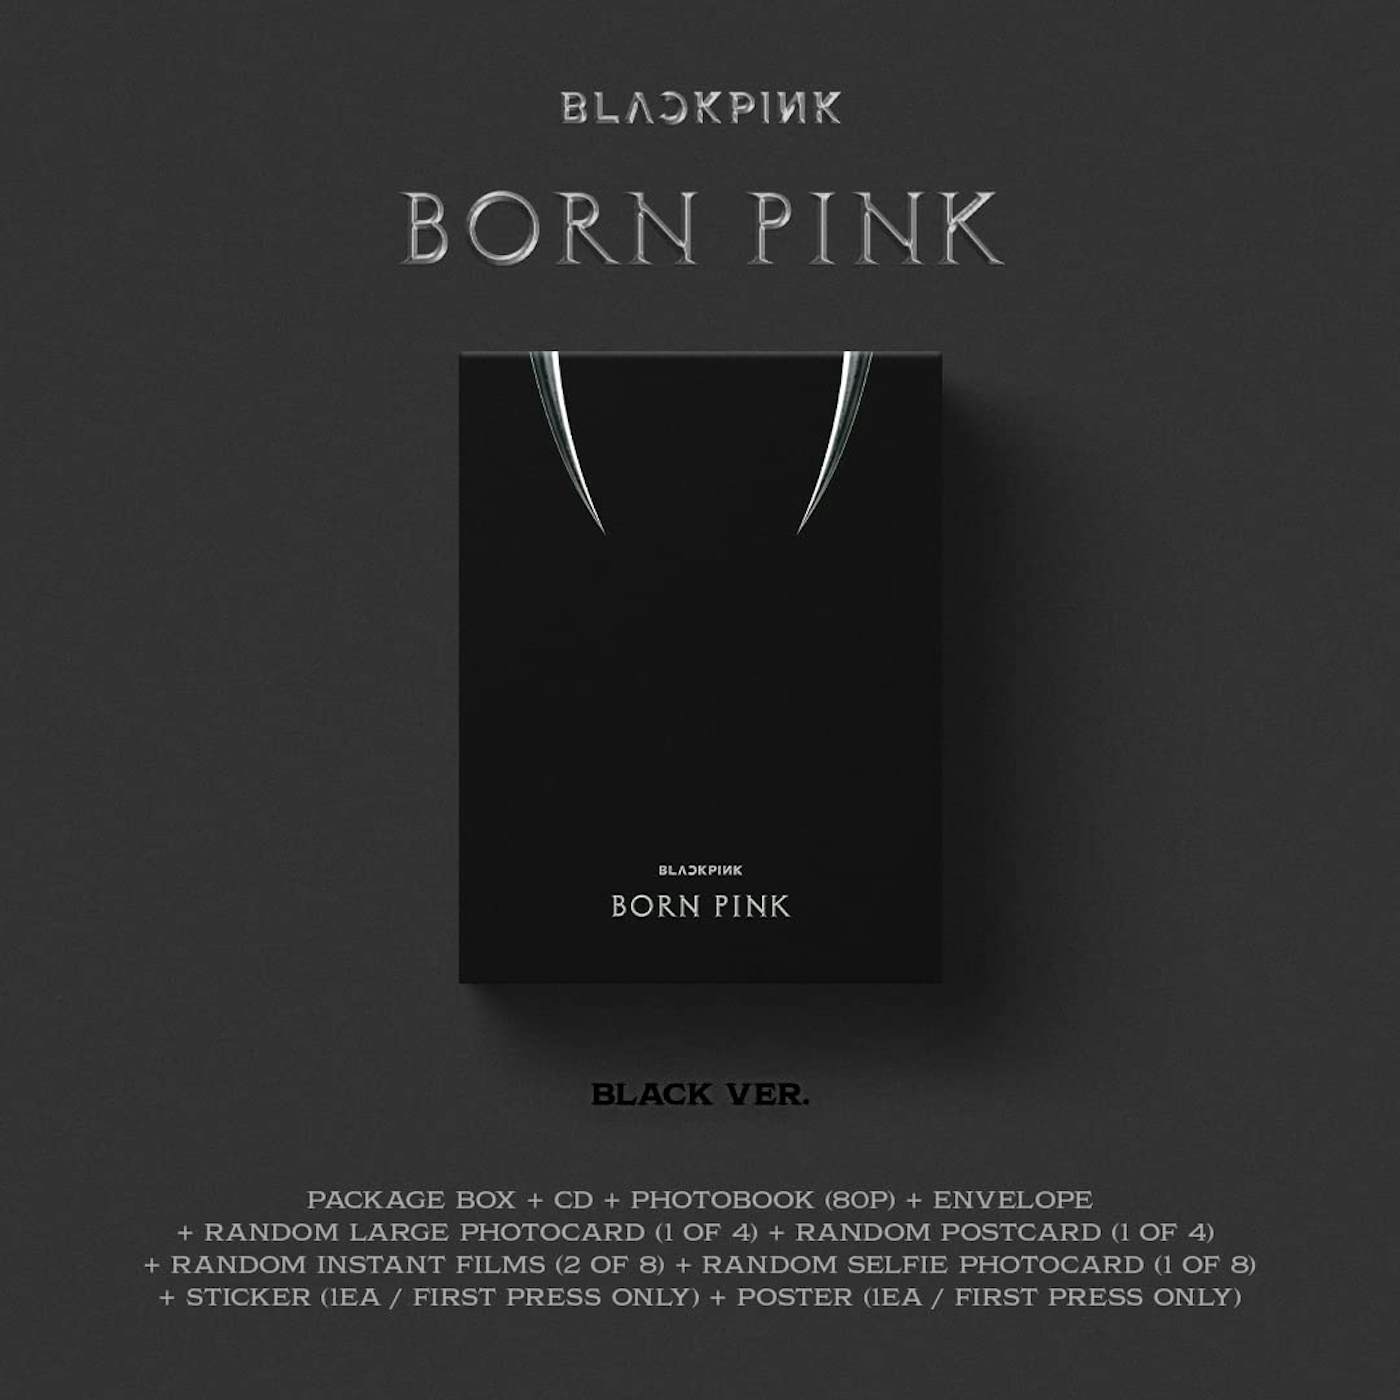 BLACKPINK BORN PINK (STANDARD CD BOXSET - VERSION B / BLACK) CD